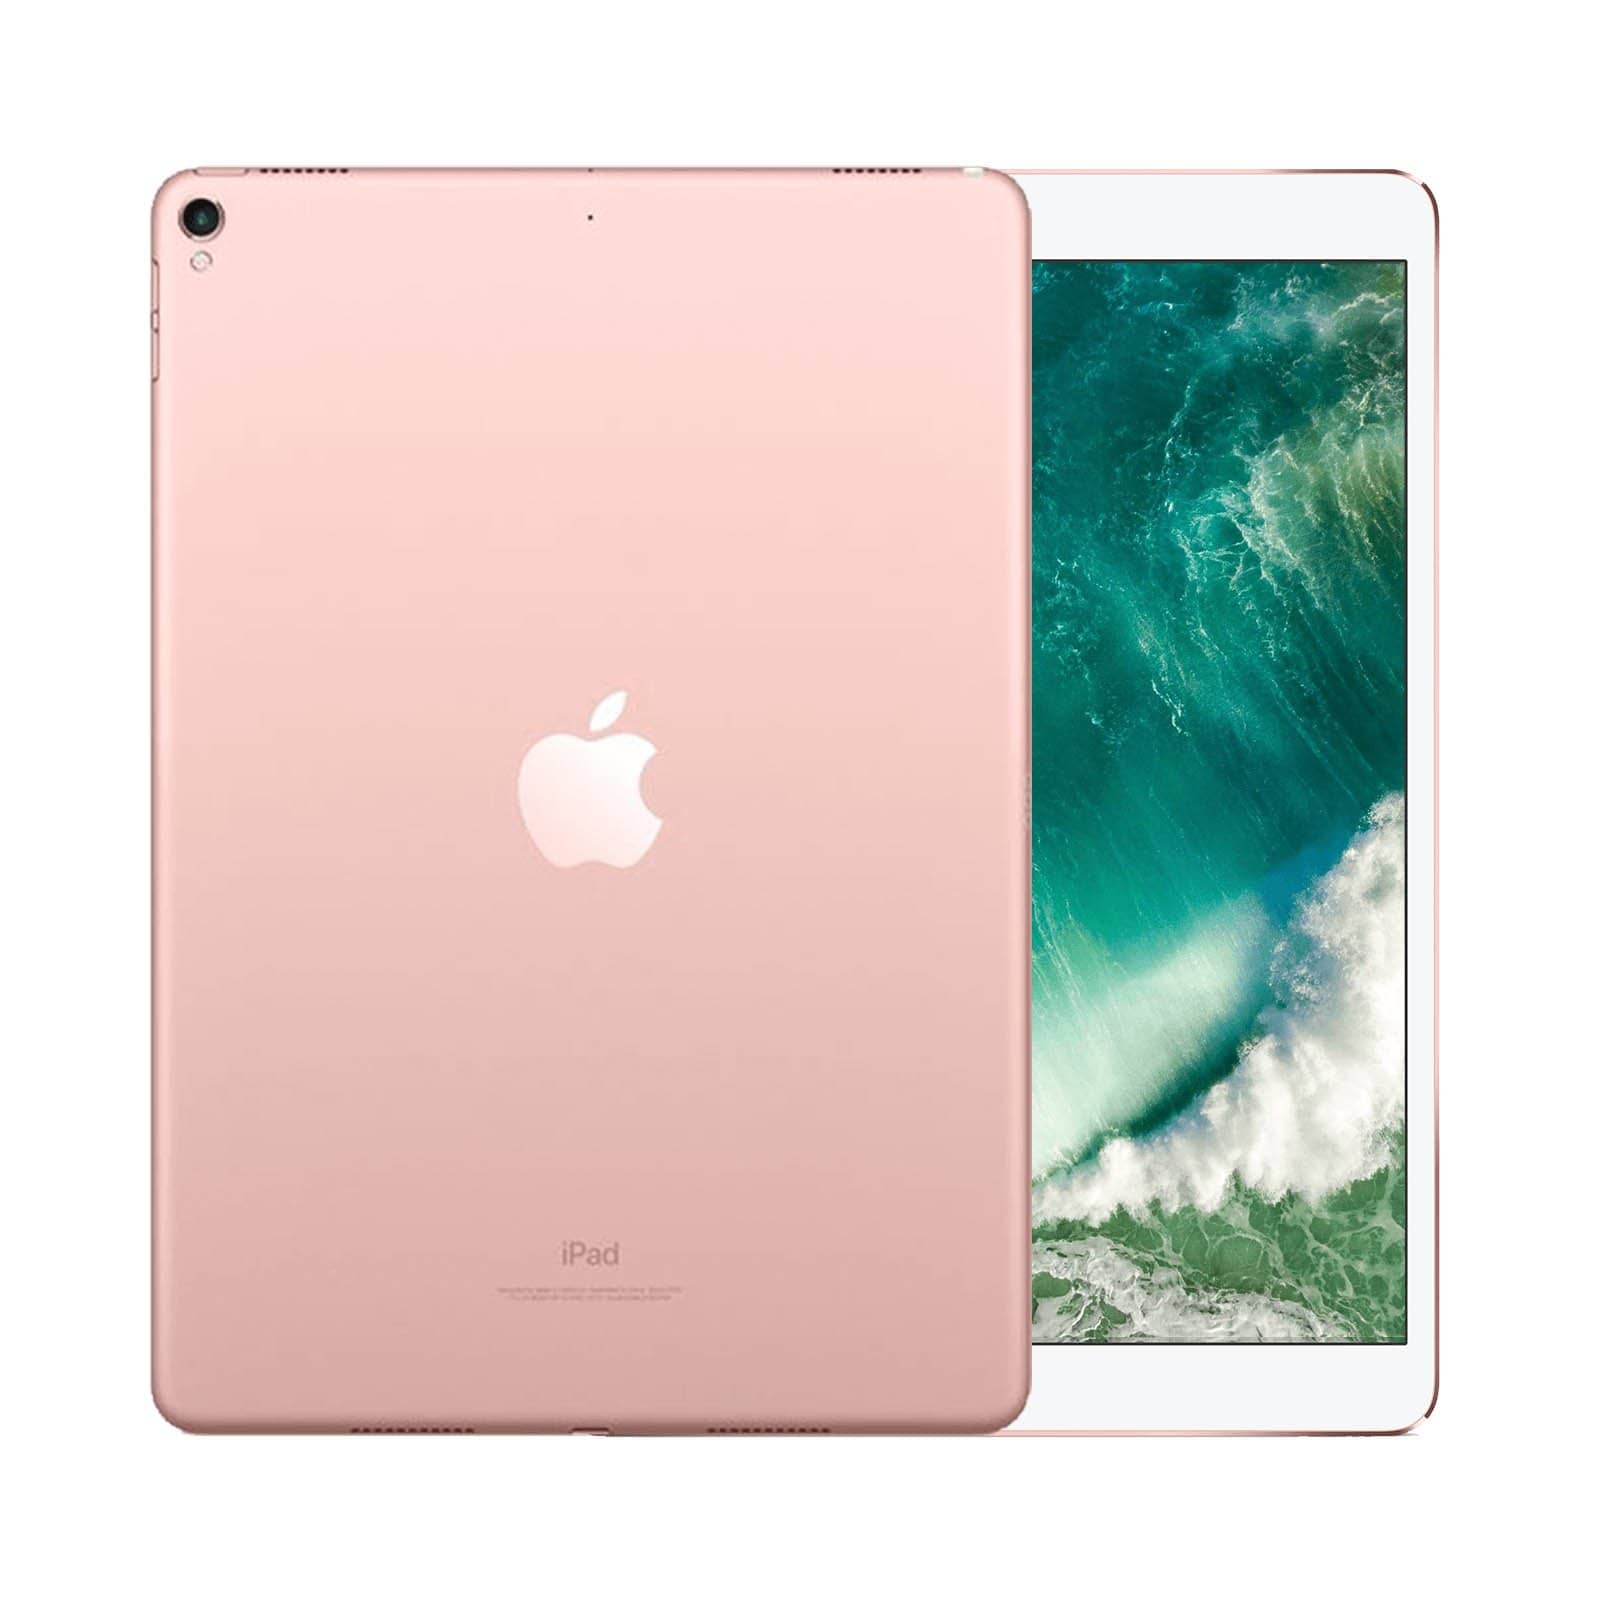 iPad Pro 10.5 Inch 256GB Rose Gold Pristine - WiFi 256GB Rose Gold Pristine